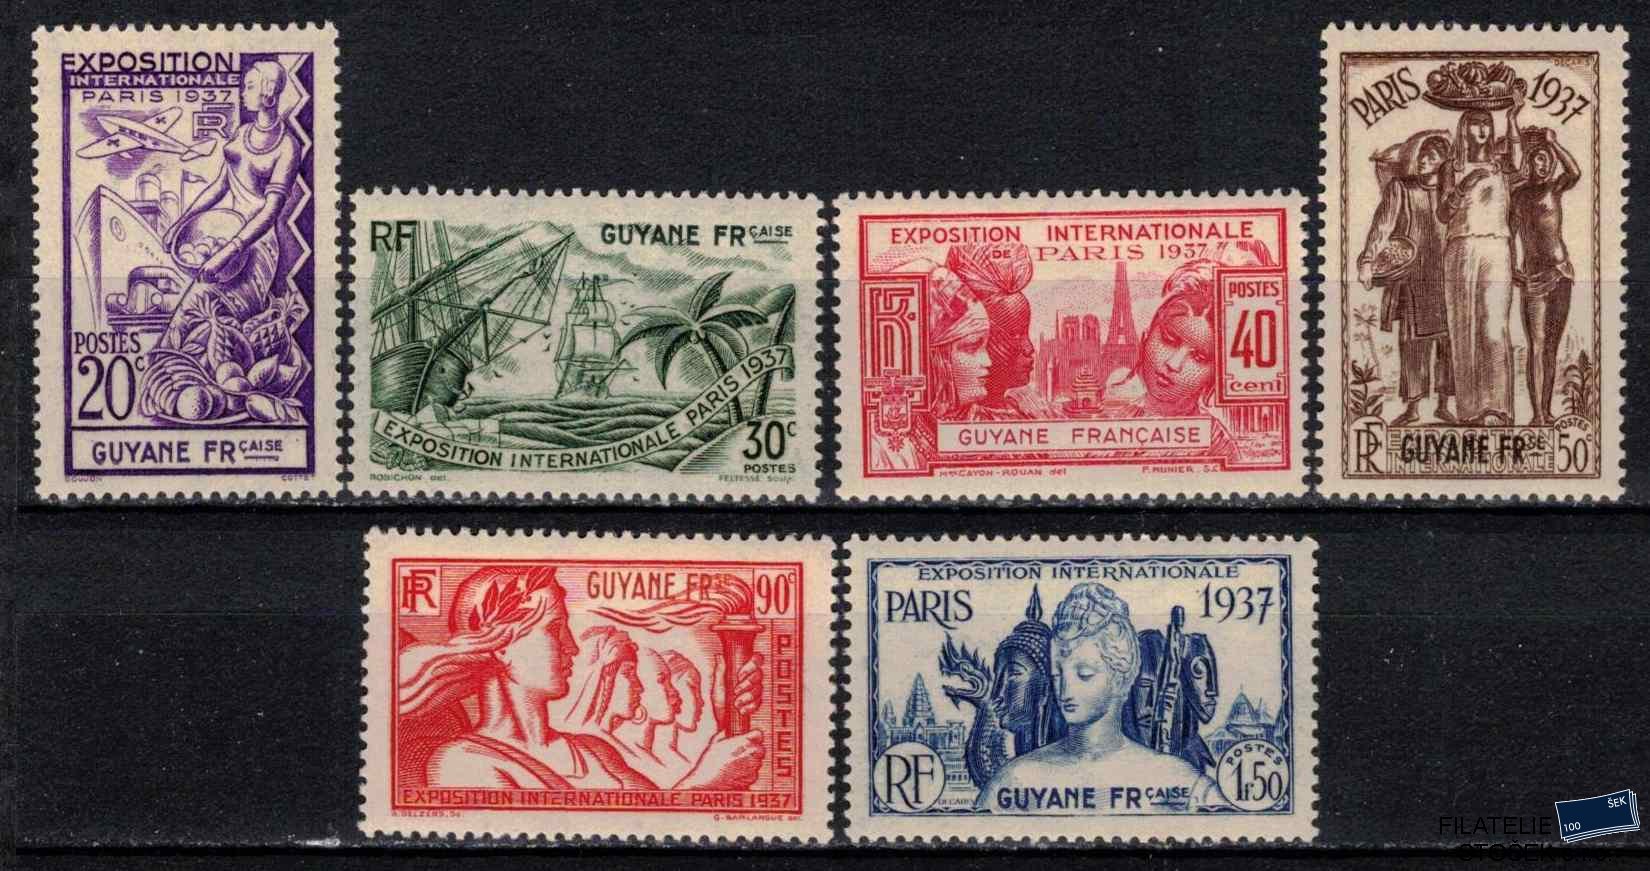 Guyane známky 1937 Exposition internationale de Paris